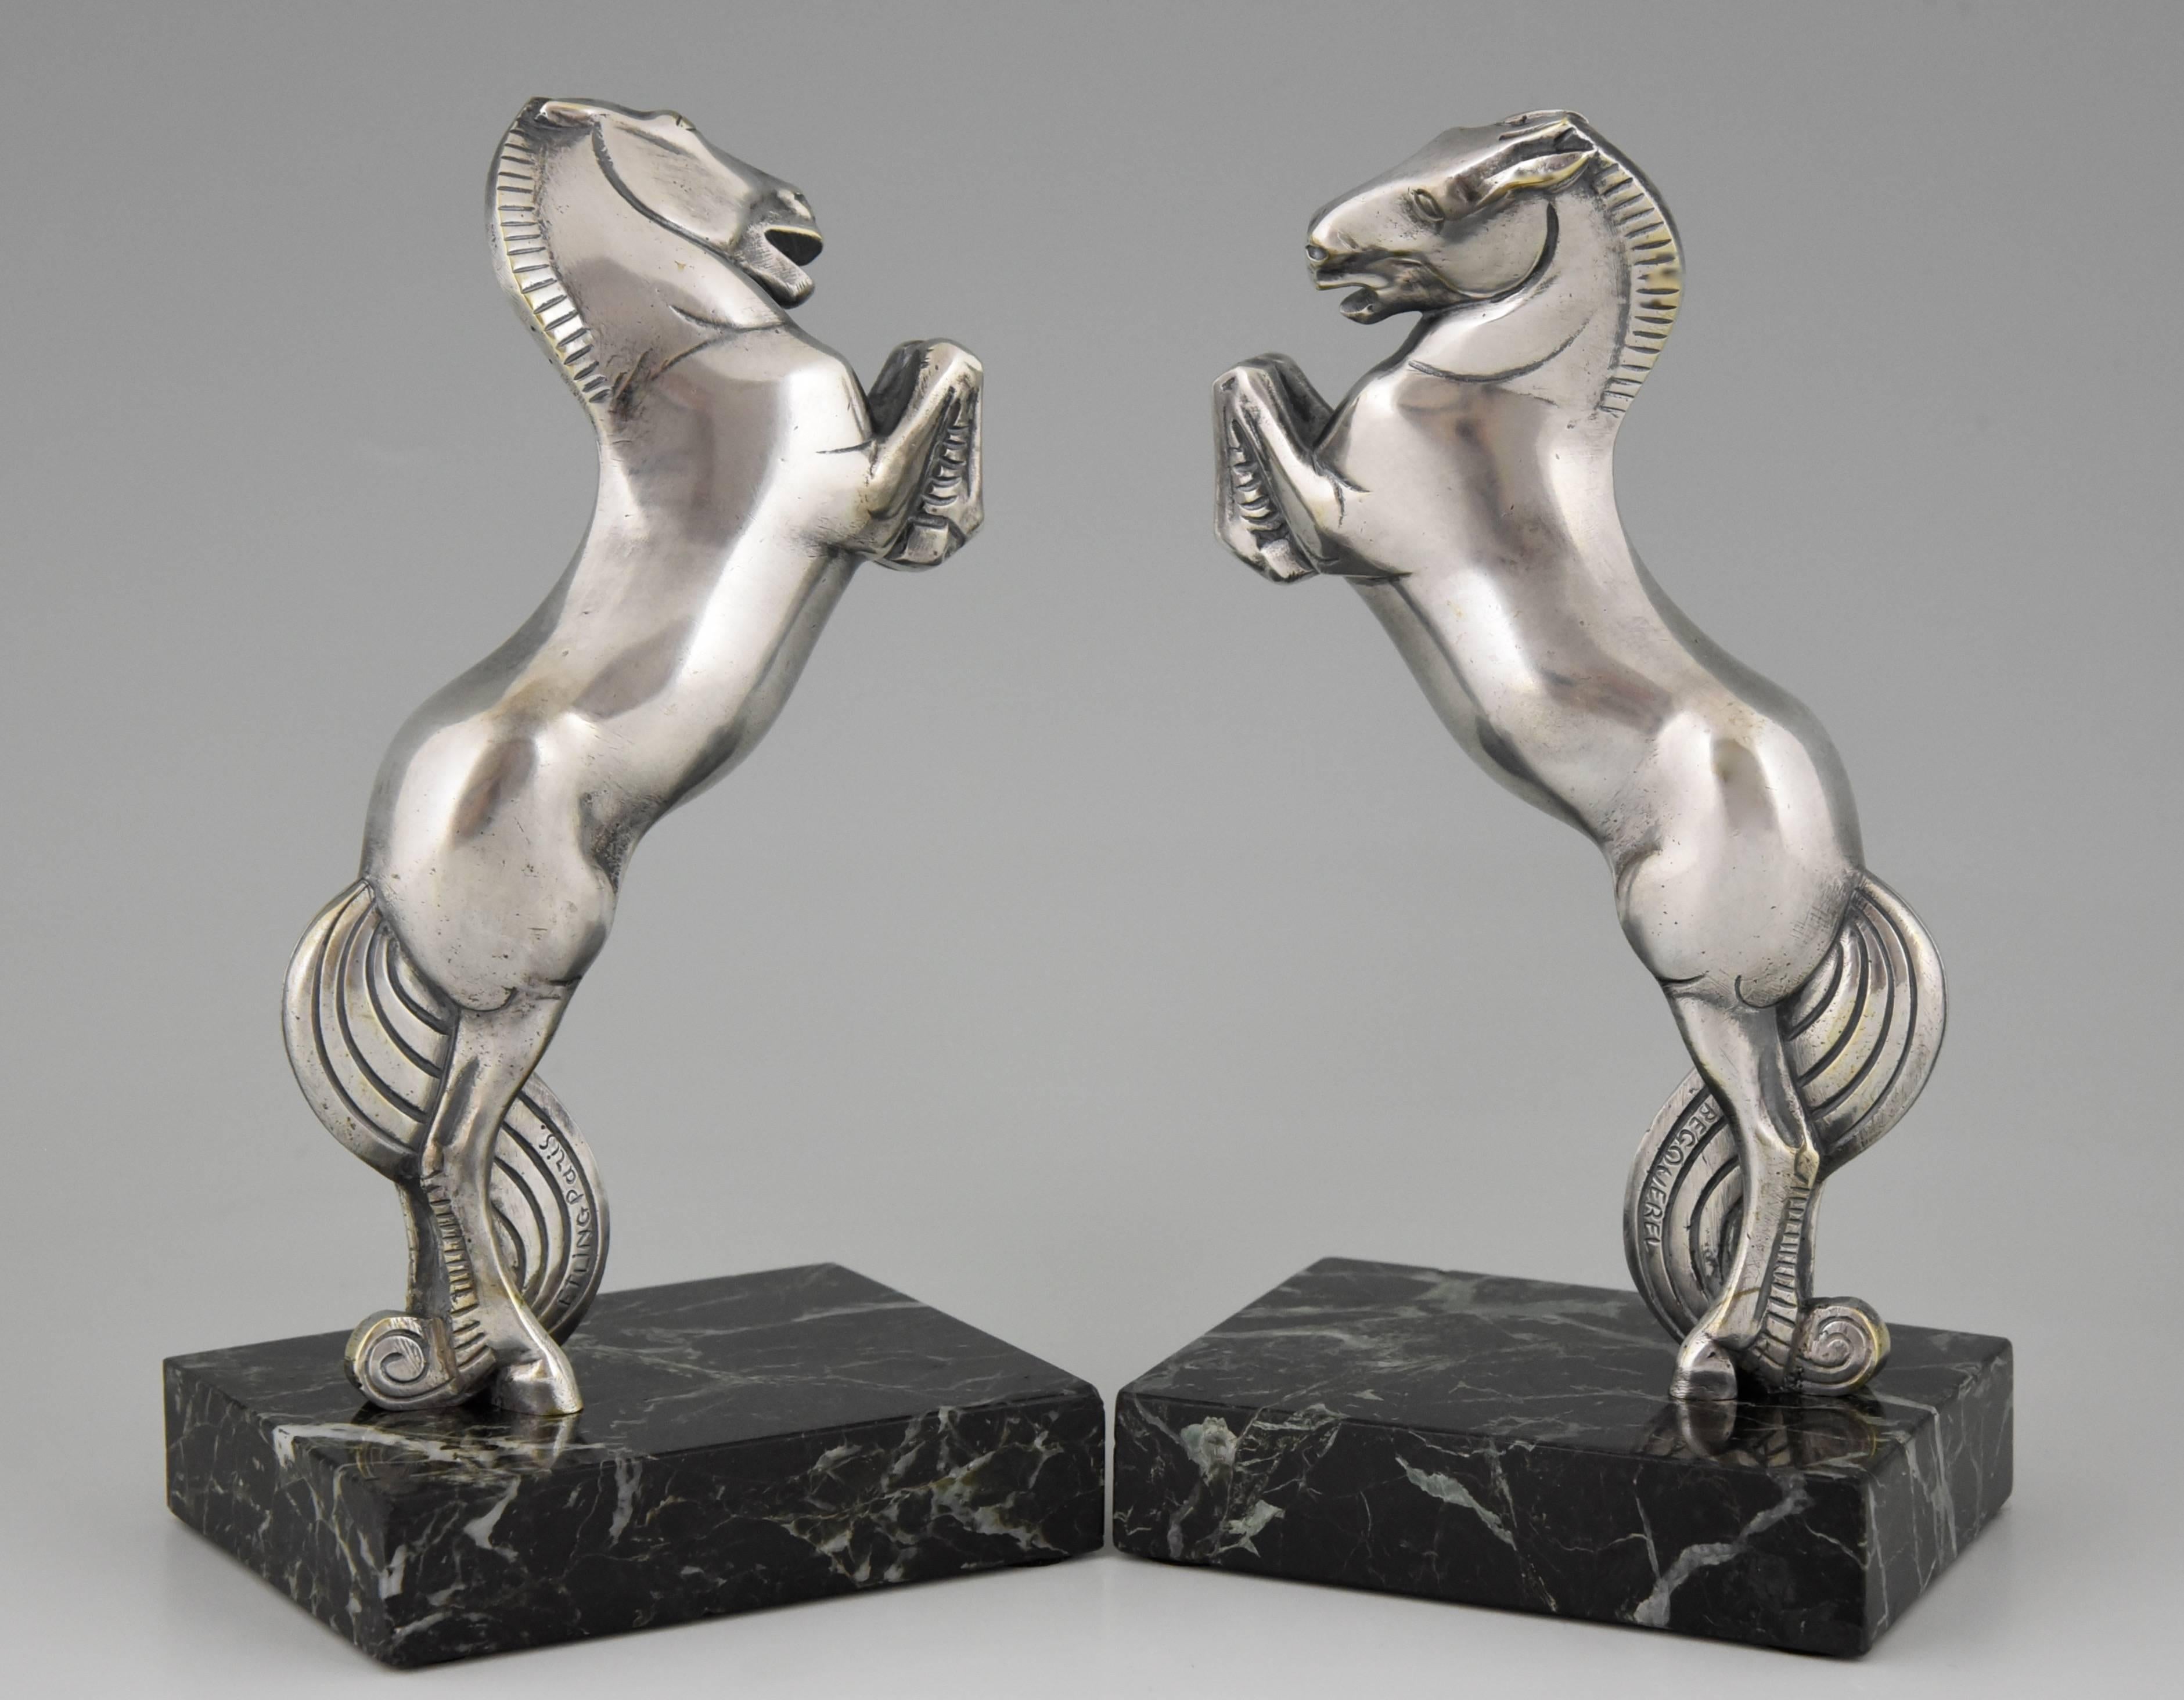 A pair of Art Deco silvered bronze horse bookends.

Artist/ Maker:
André Vincent Becquerel, 

Signature/ Marks:
Becquerel.
Etling Paris founders signature. 

Style:
Art Deco.

Date:
circa 1925-1930.

Material: 
Silvered bronze on a